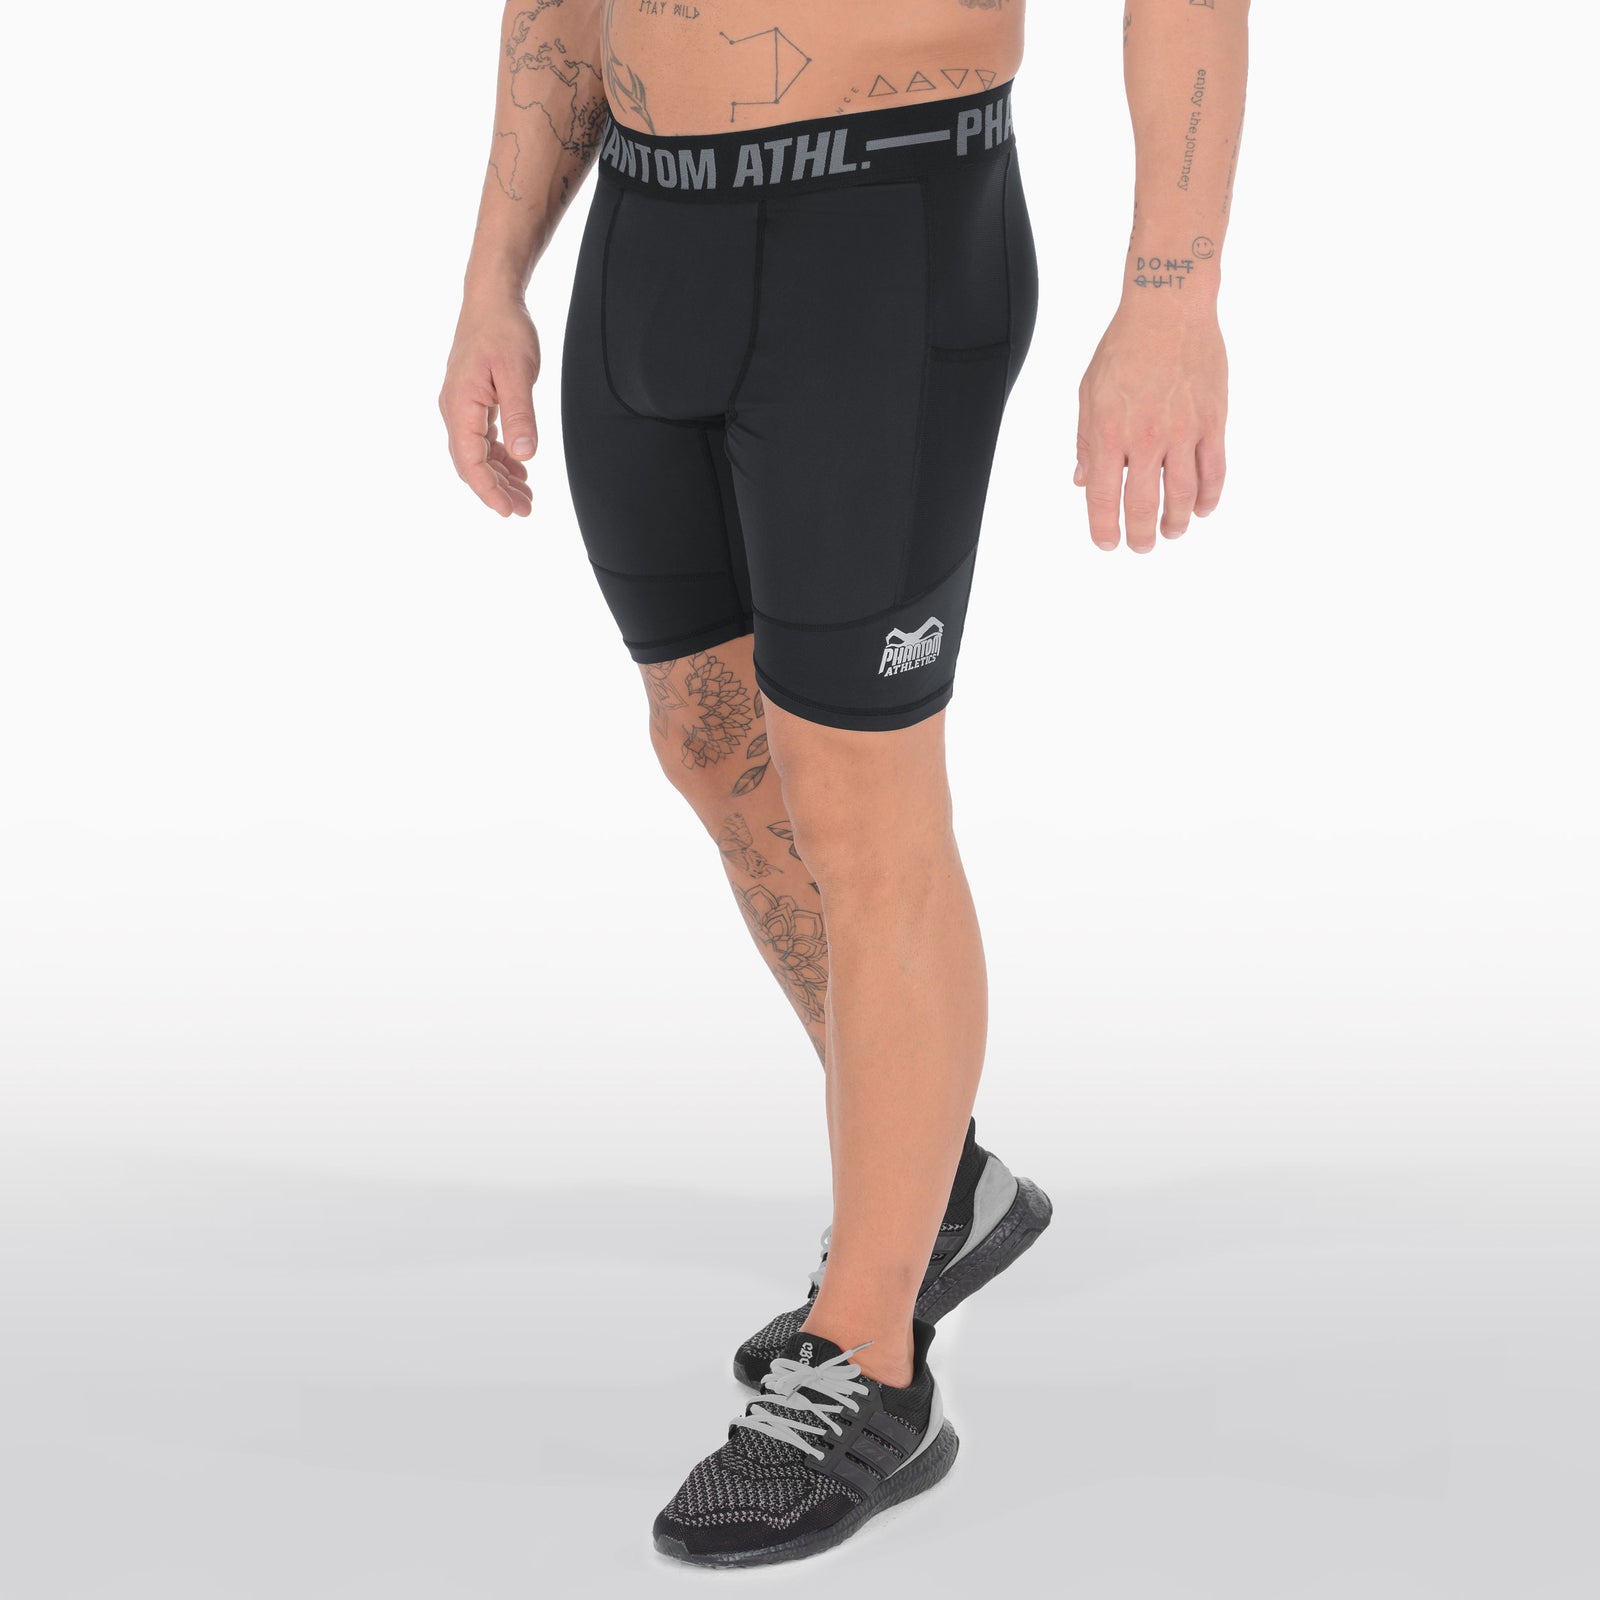 Buy compression shorts for men online - PHANTOM ATHLETICS